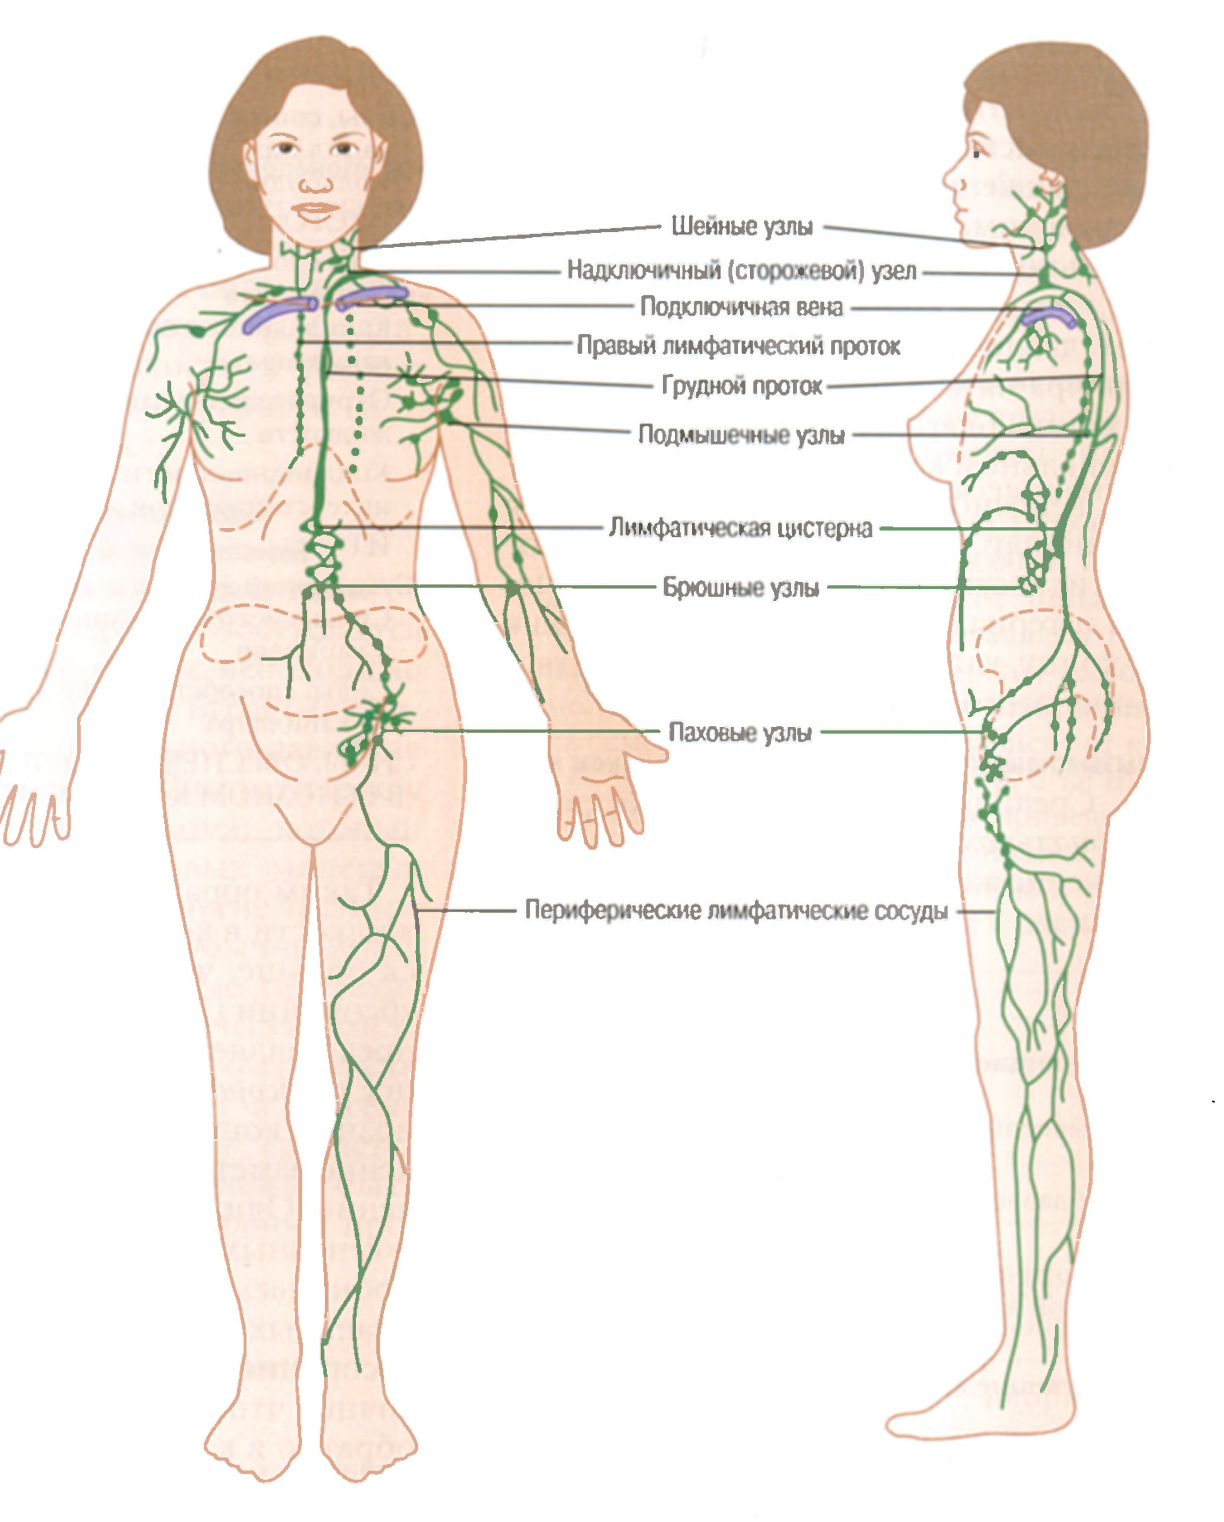 У человека более 500 лимфатических узлов